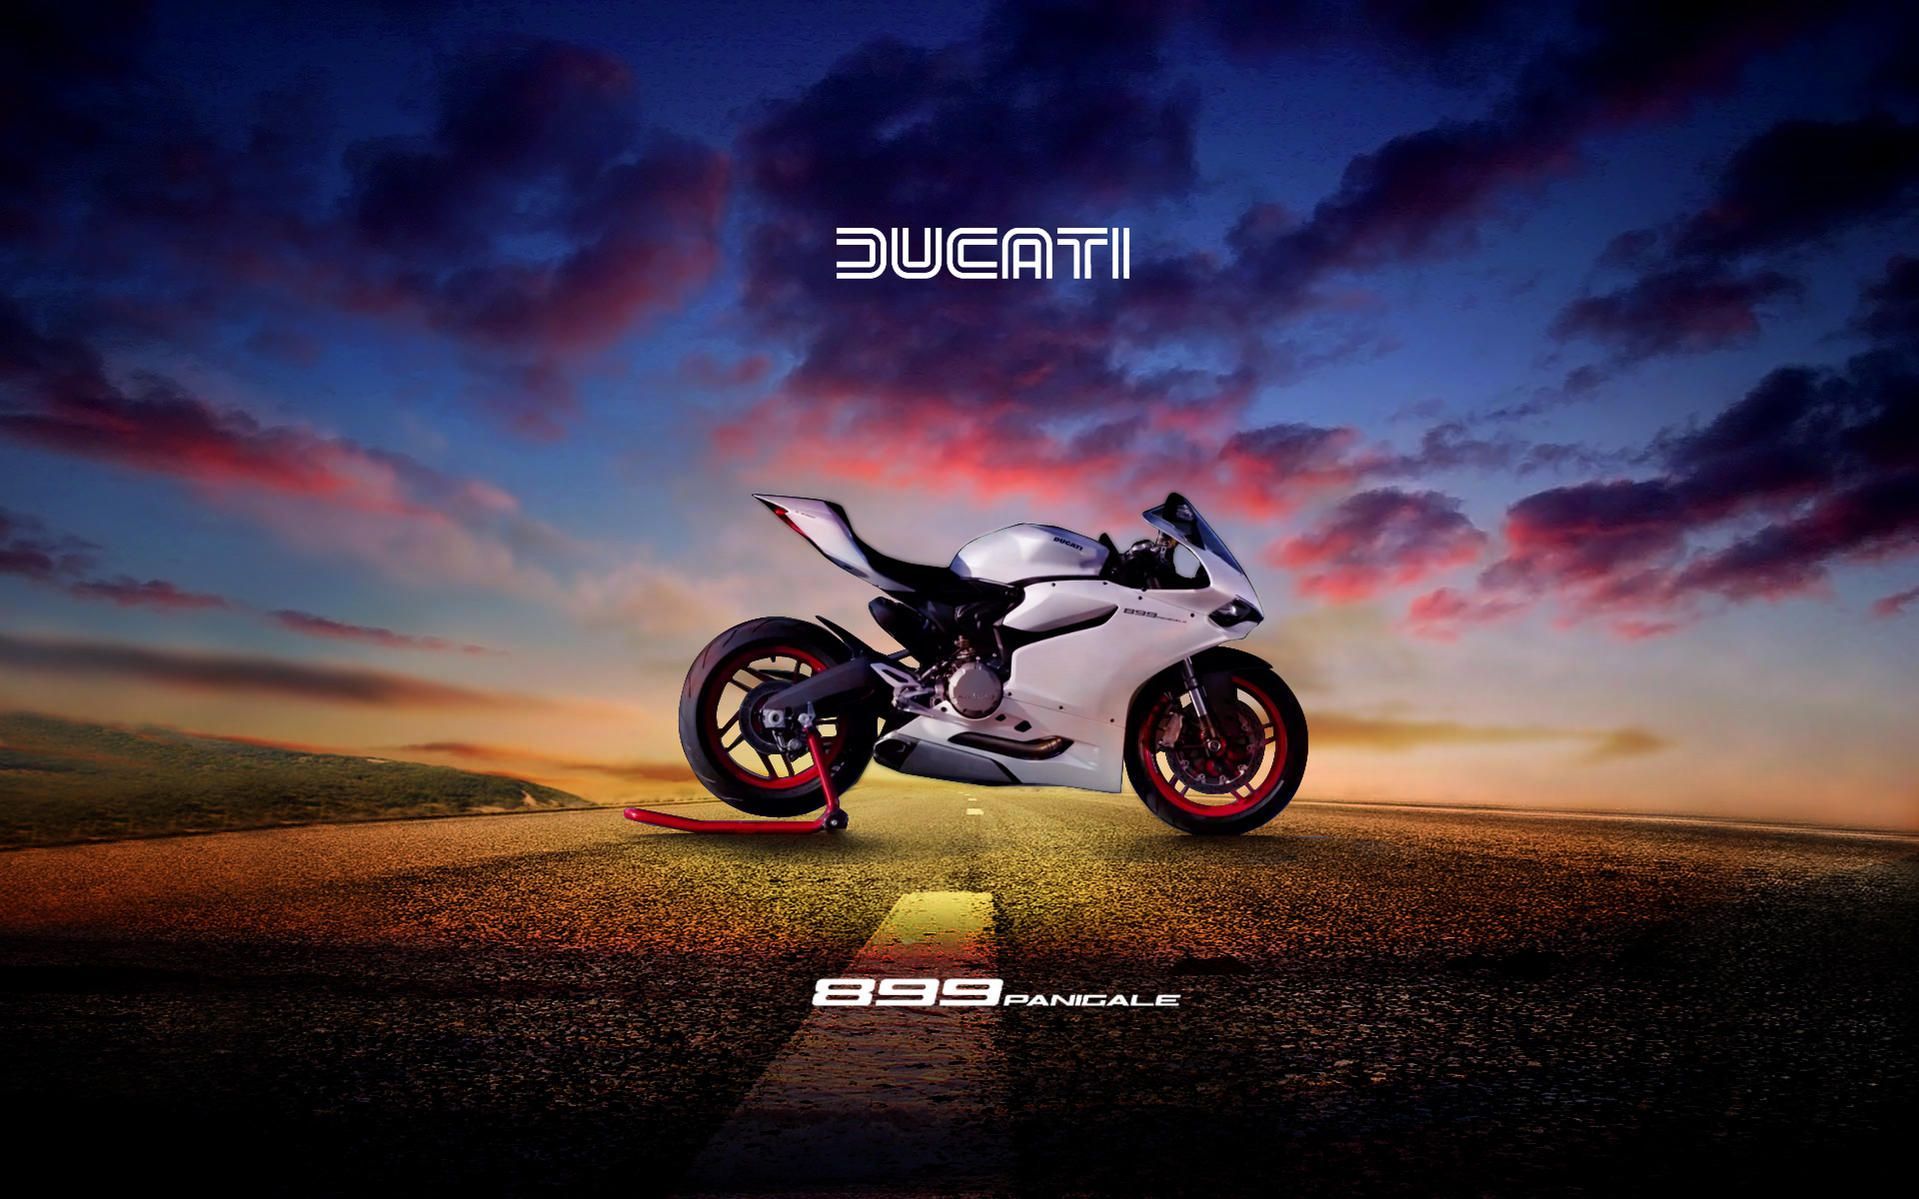 Ducati 899 Wallpaper Free Ducati 899 Background